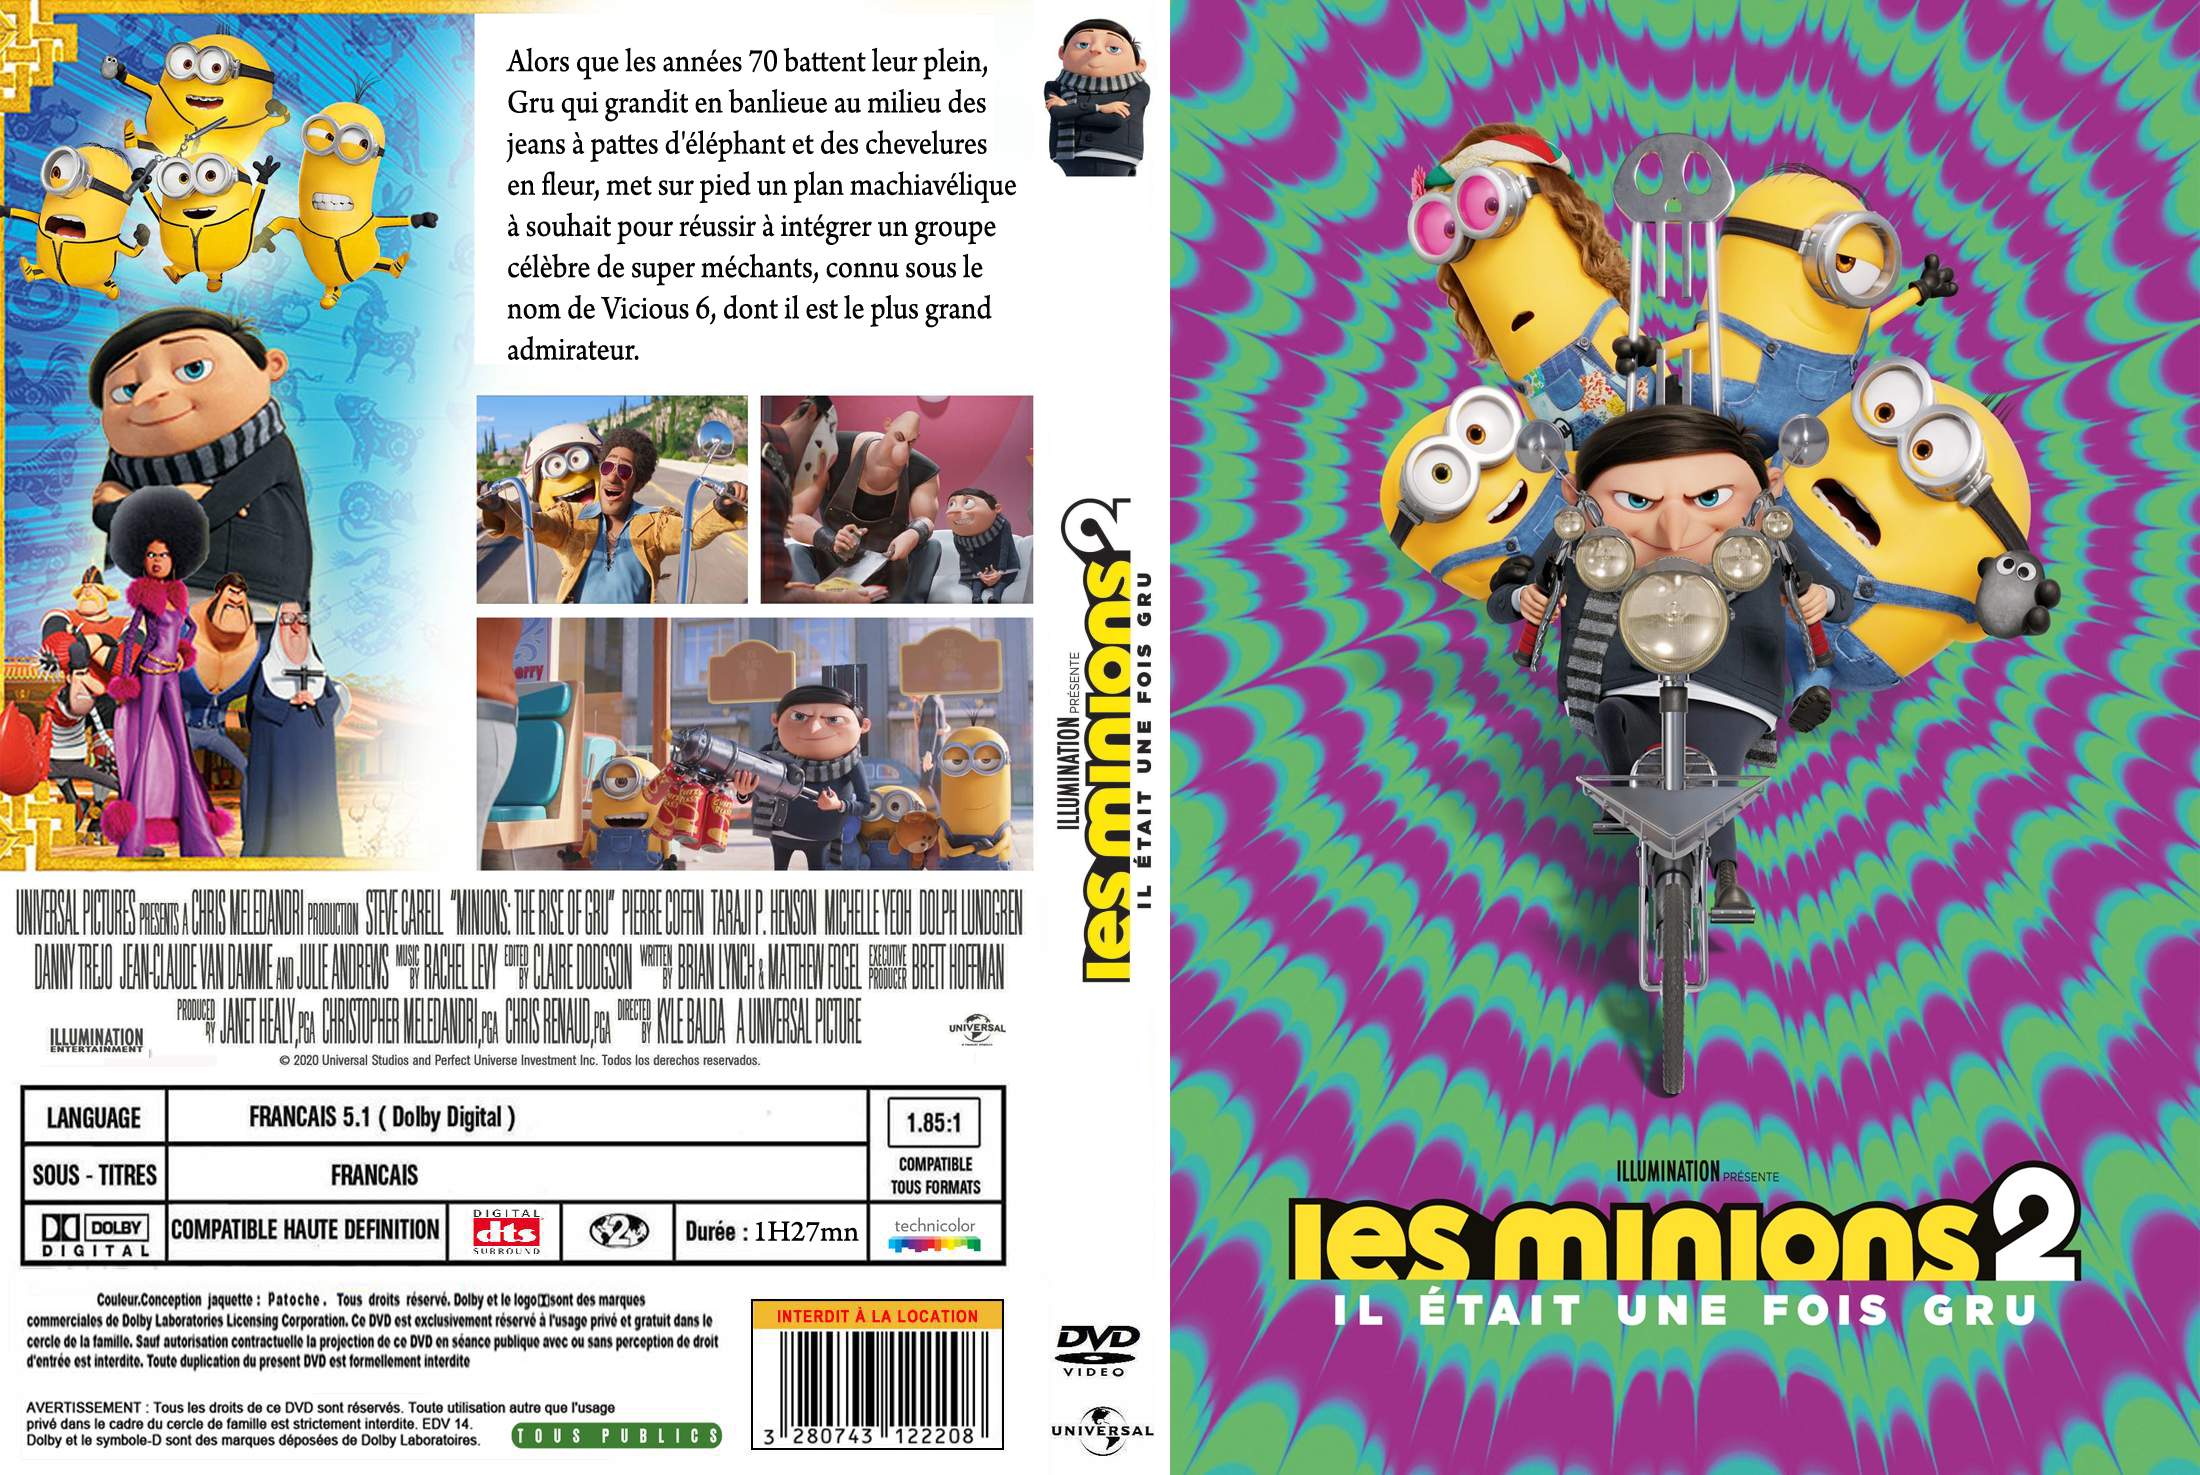 Jaquette DVD Les minions 2 custom